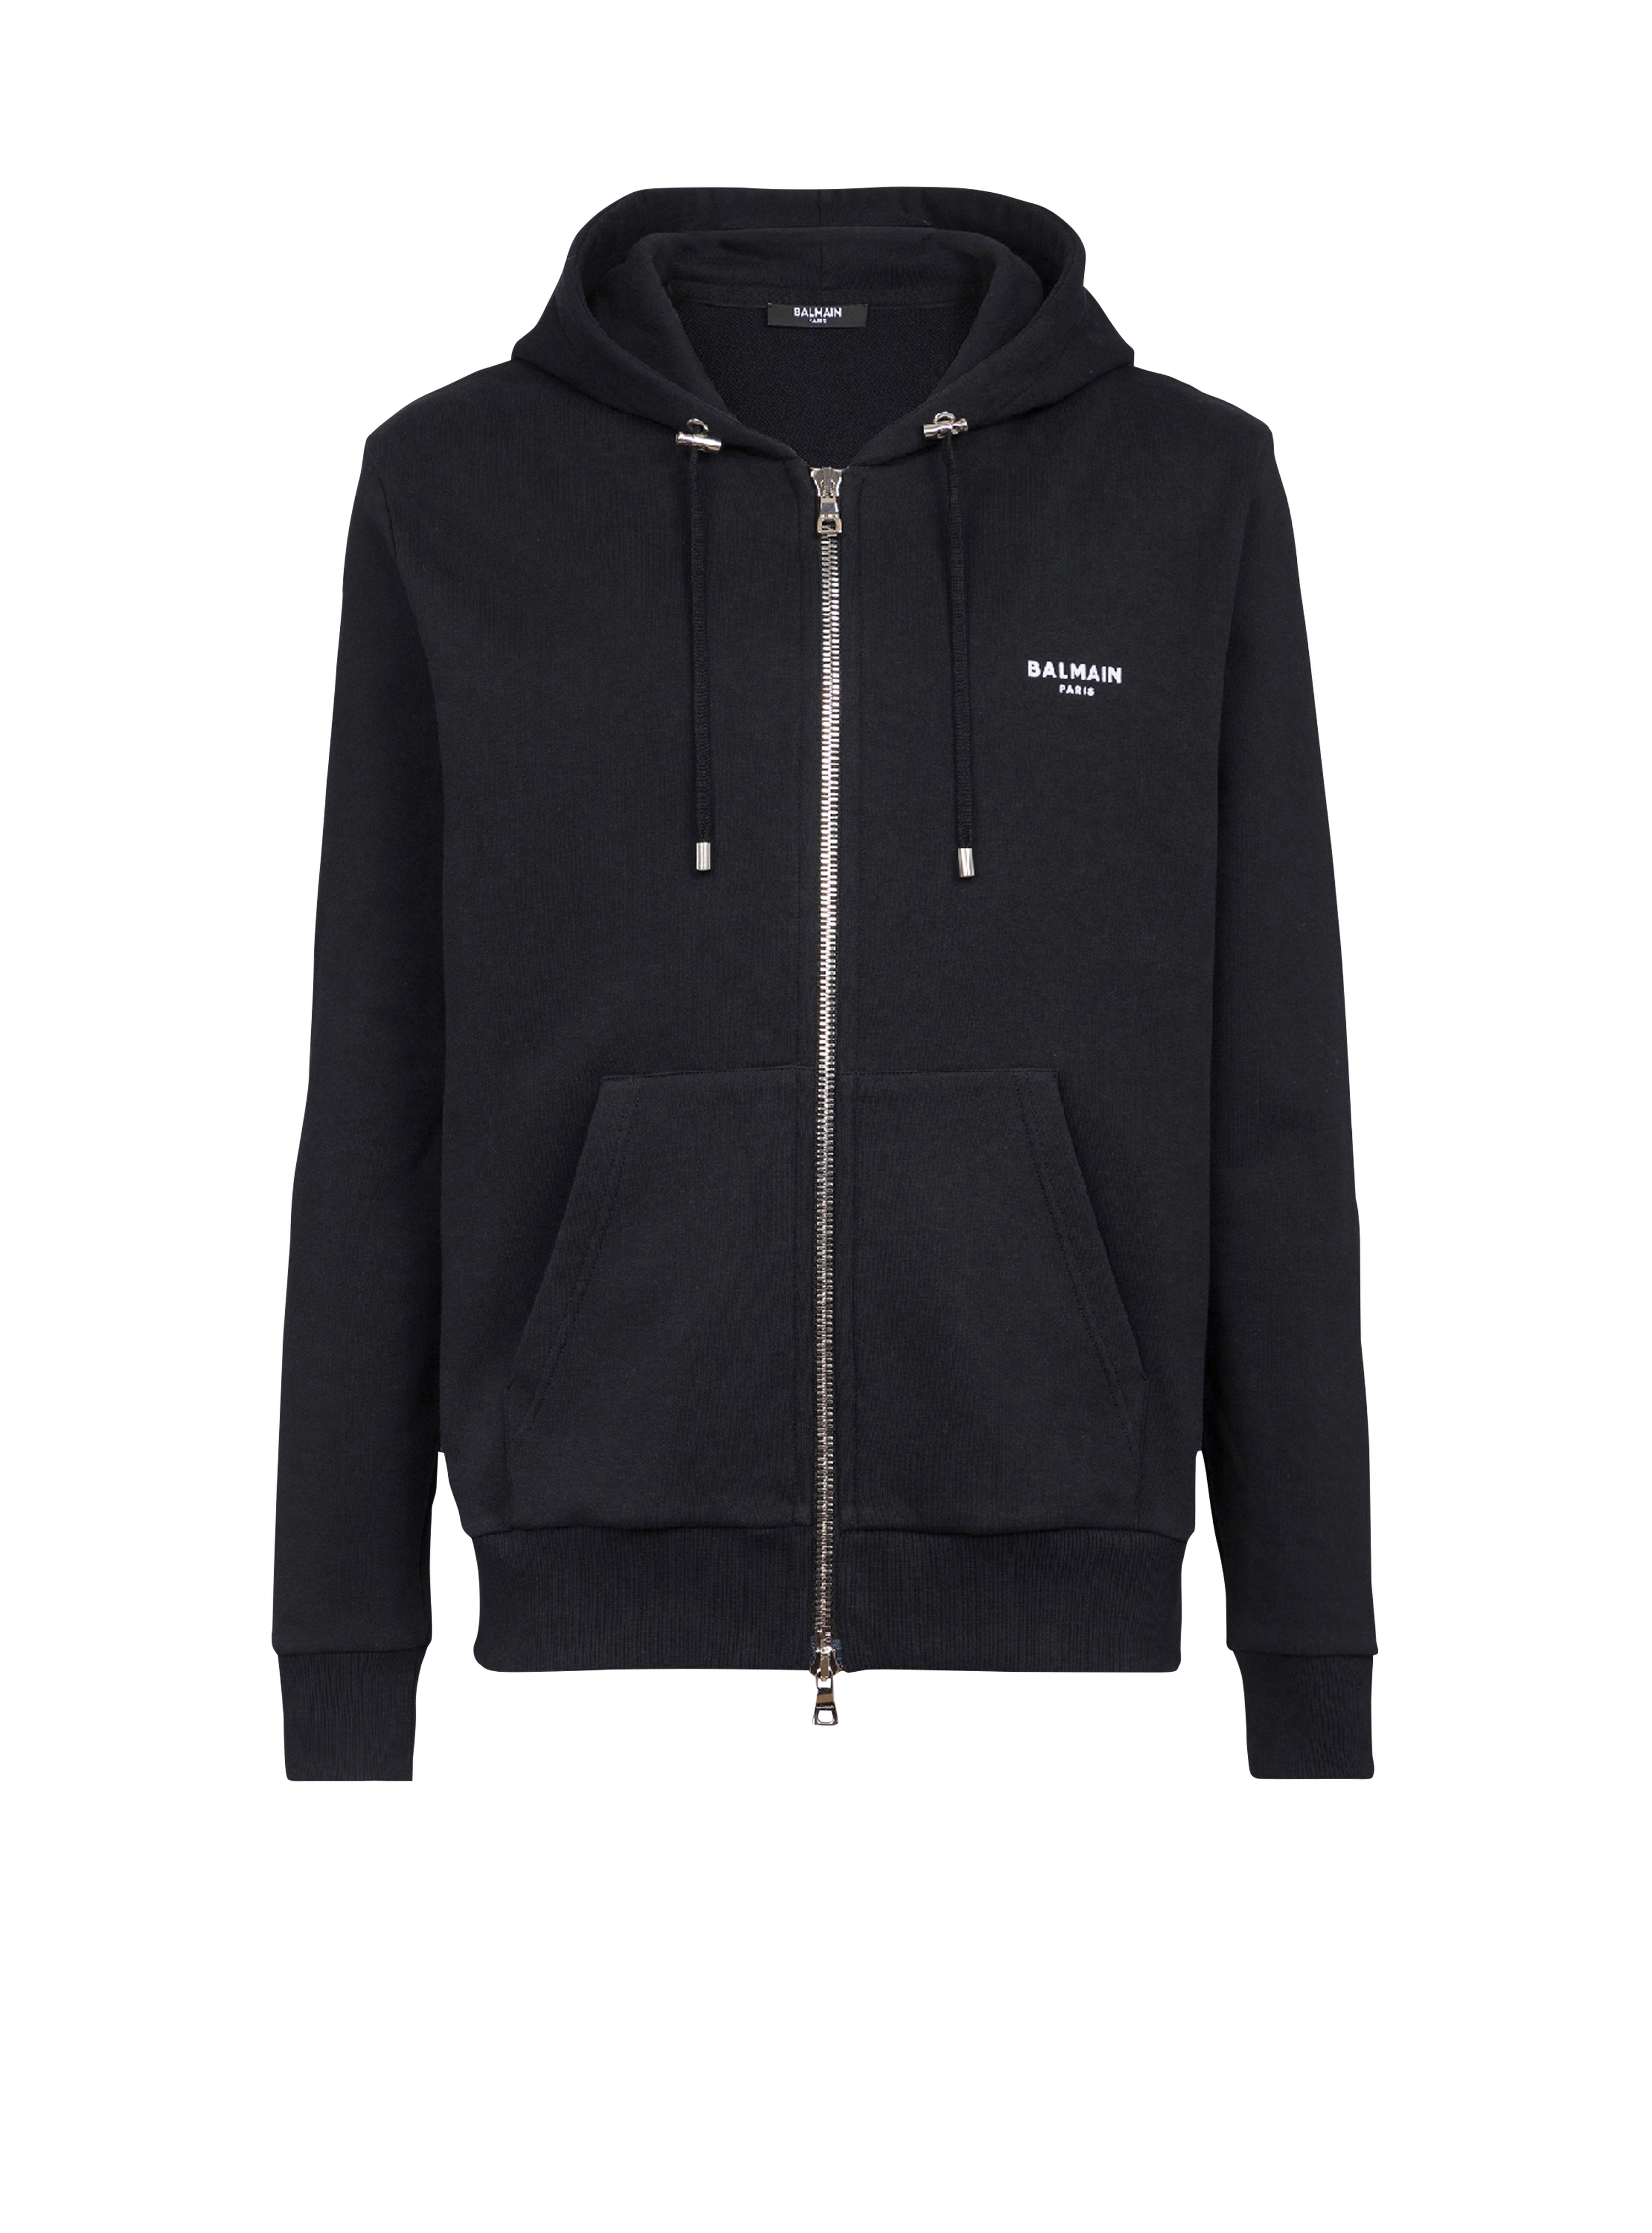 Eco-designed cotton sweatshirt with small flocked Balmain logo, black